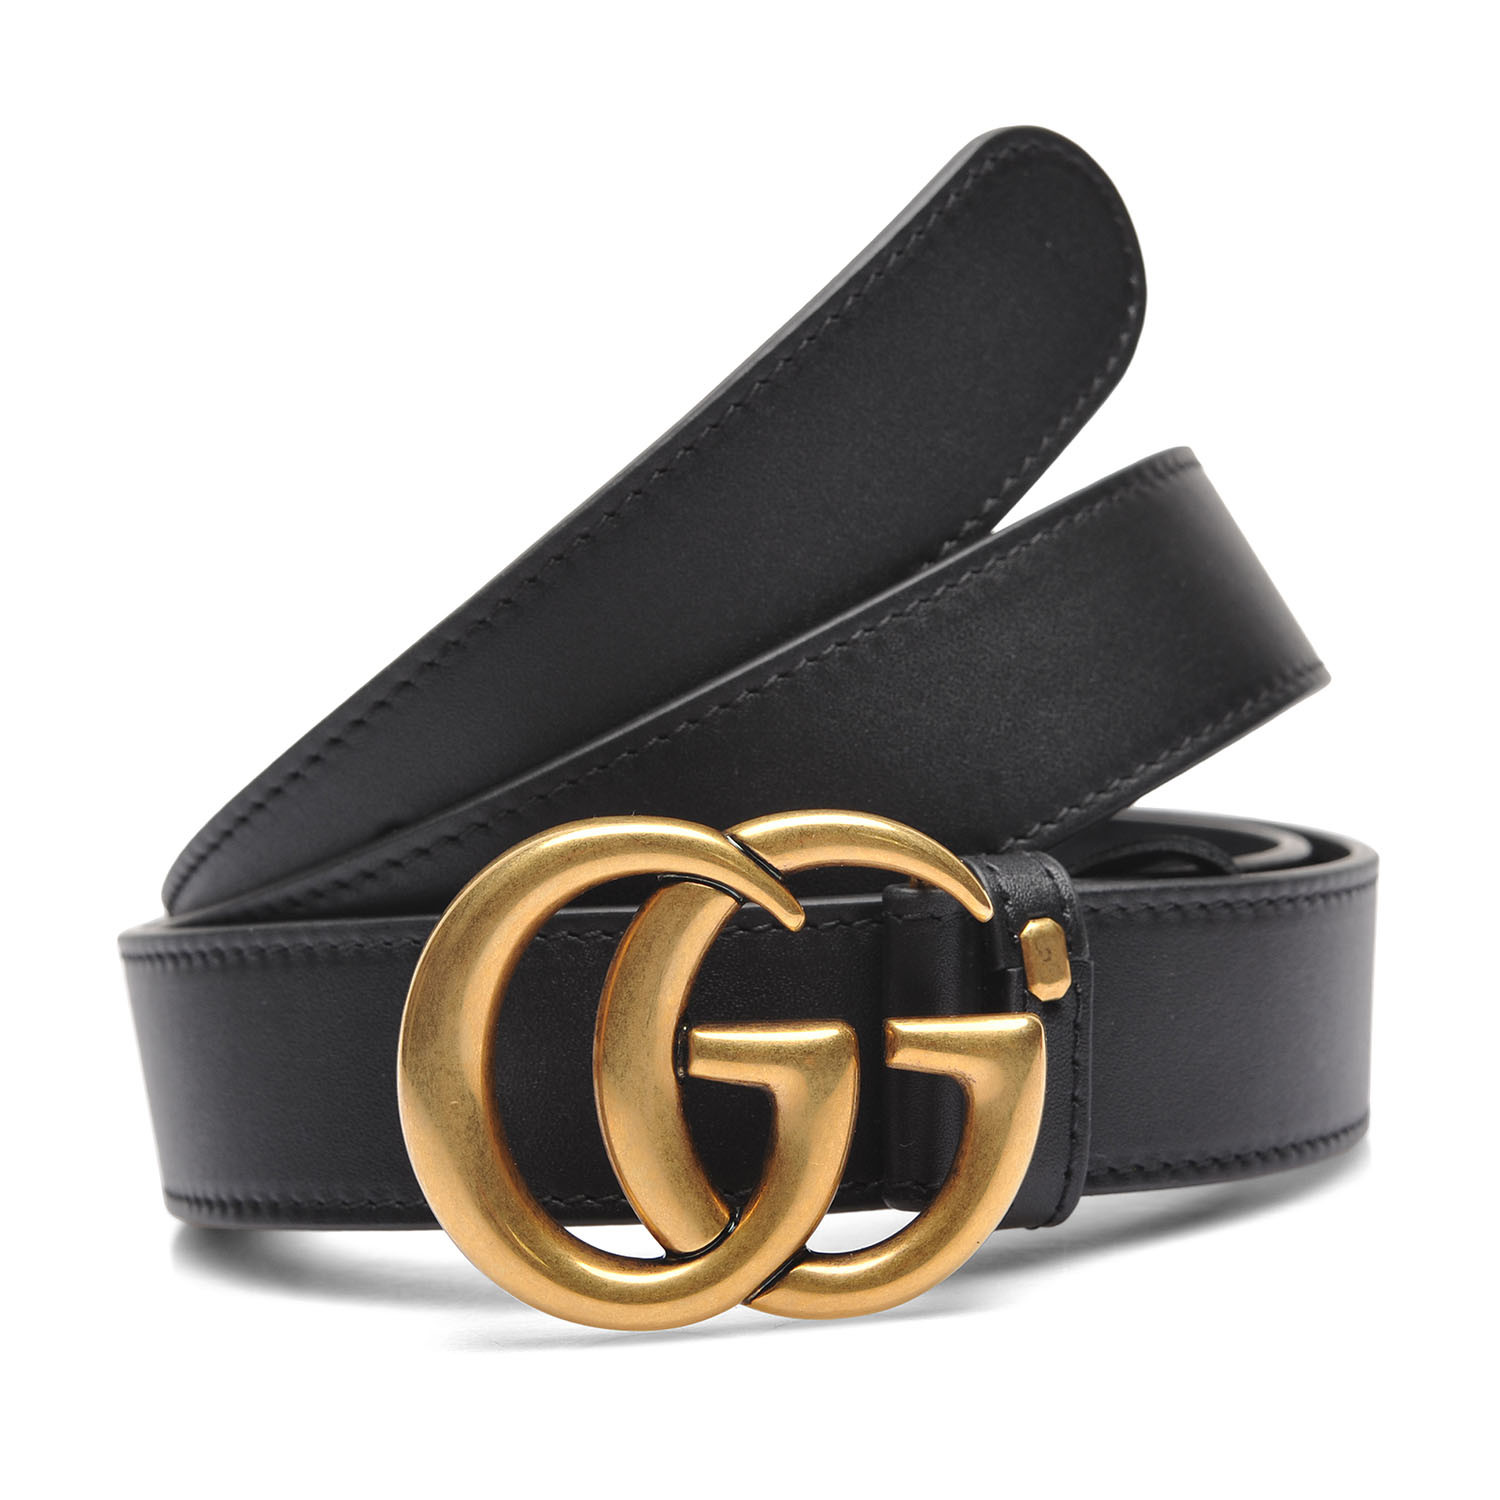 gucci belt black gold